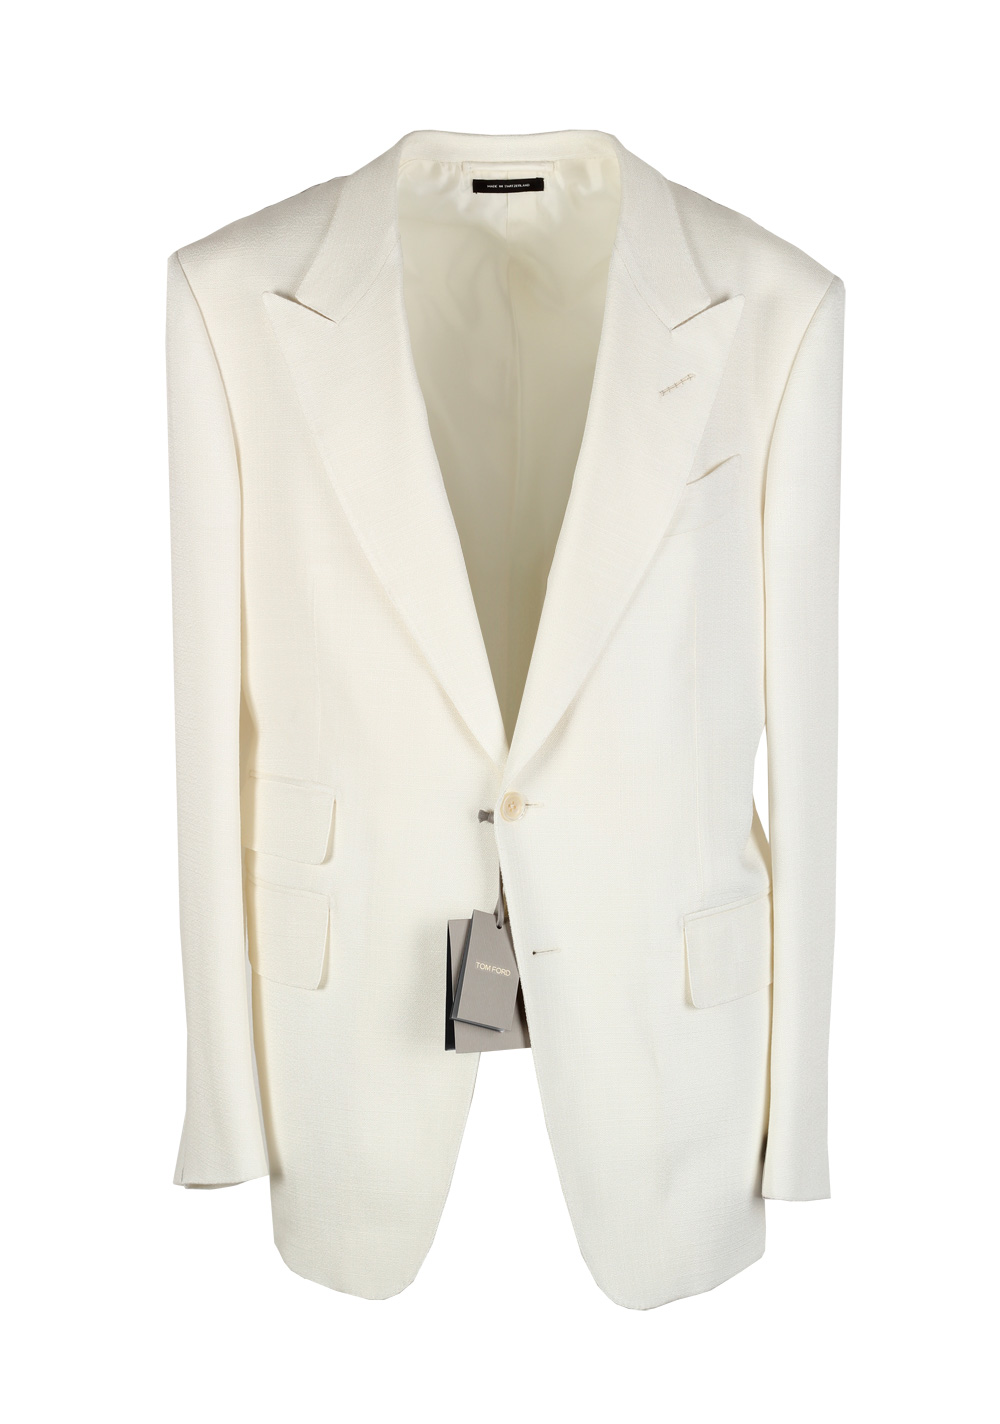 TOM FORD Shelton Off White Sport Coat Size 52 / 42R U.S. Rayon Silk ...